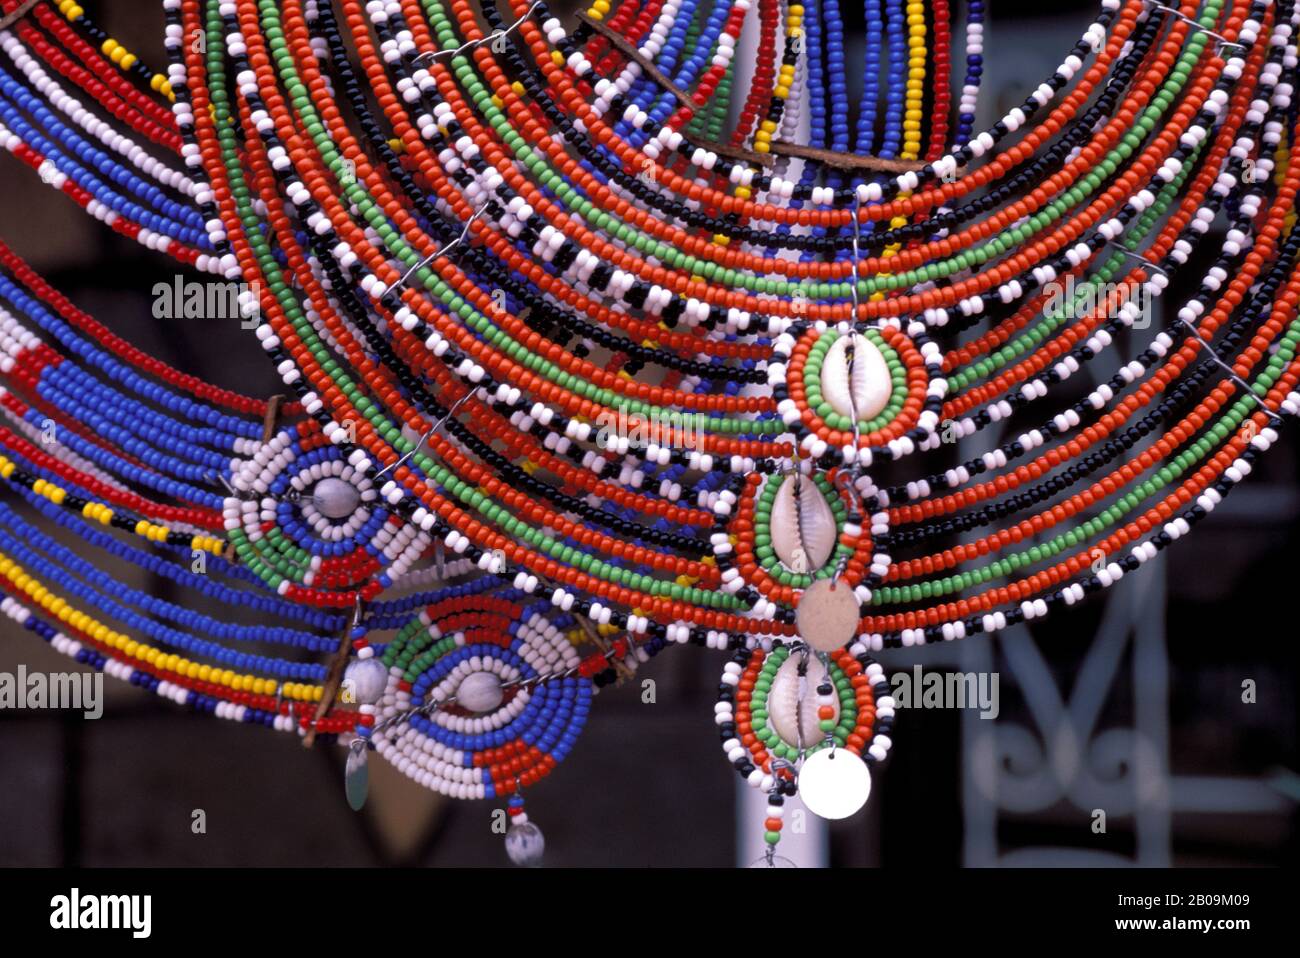 Artesanías masai fotografías e imágenes de alta resolución - Alamy